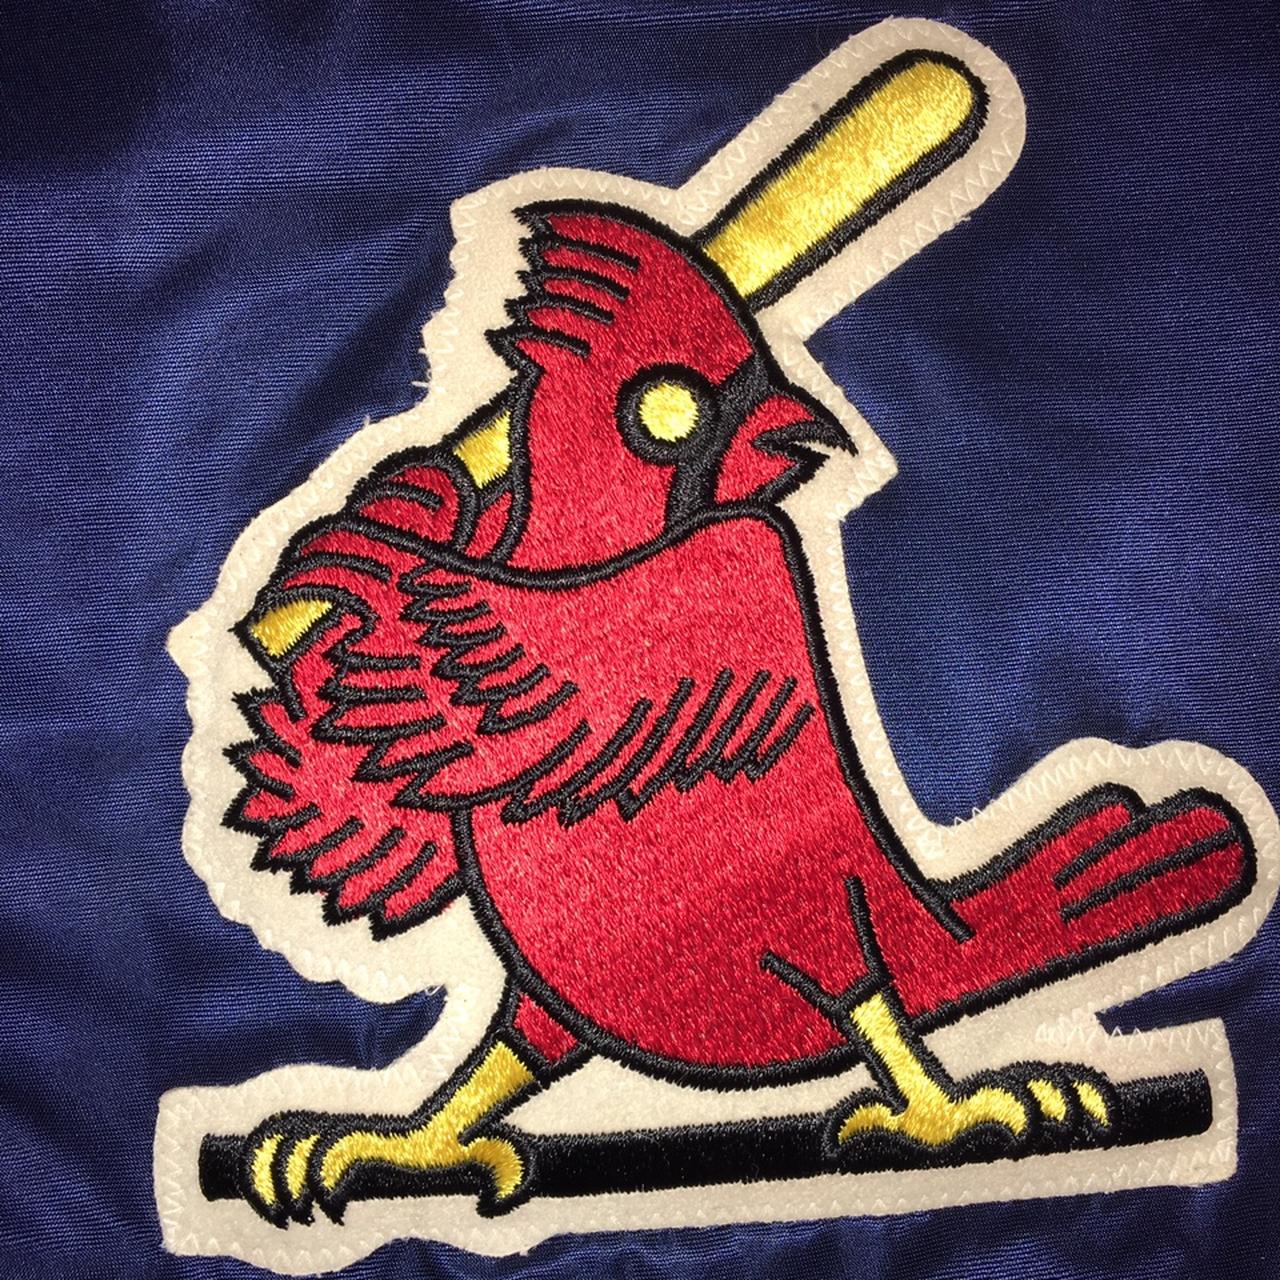 Vintage Louisville Cardinals Full Zip Jacket Size XL - Depop